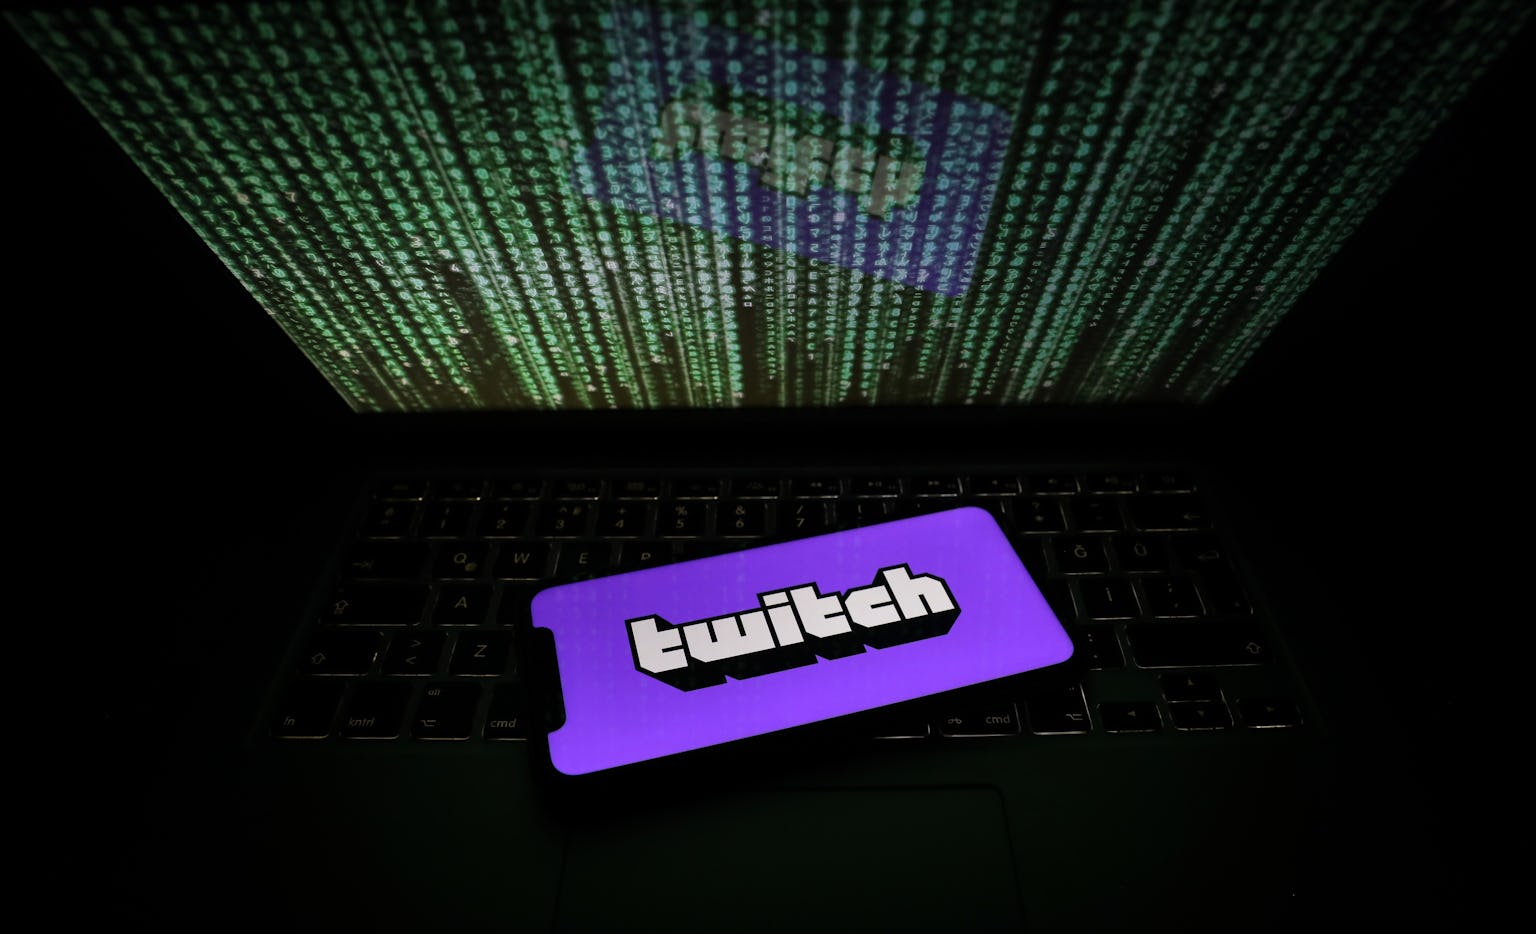 Twitch leak 10 biggest revelations from the unprecedented data breach